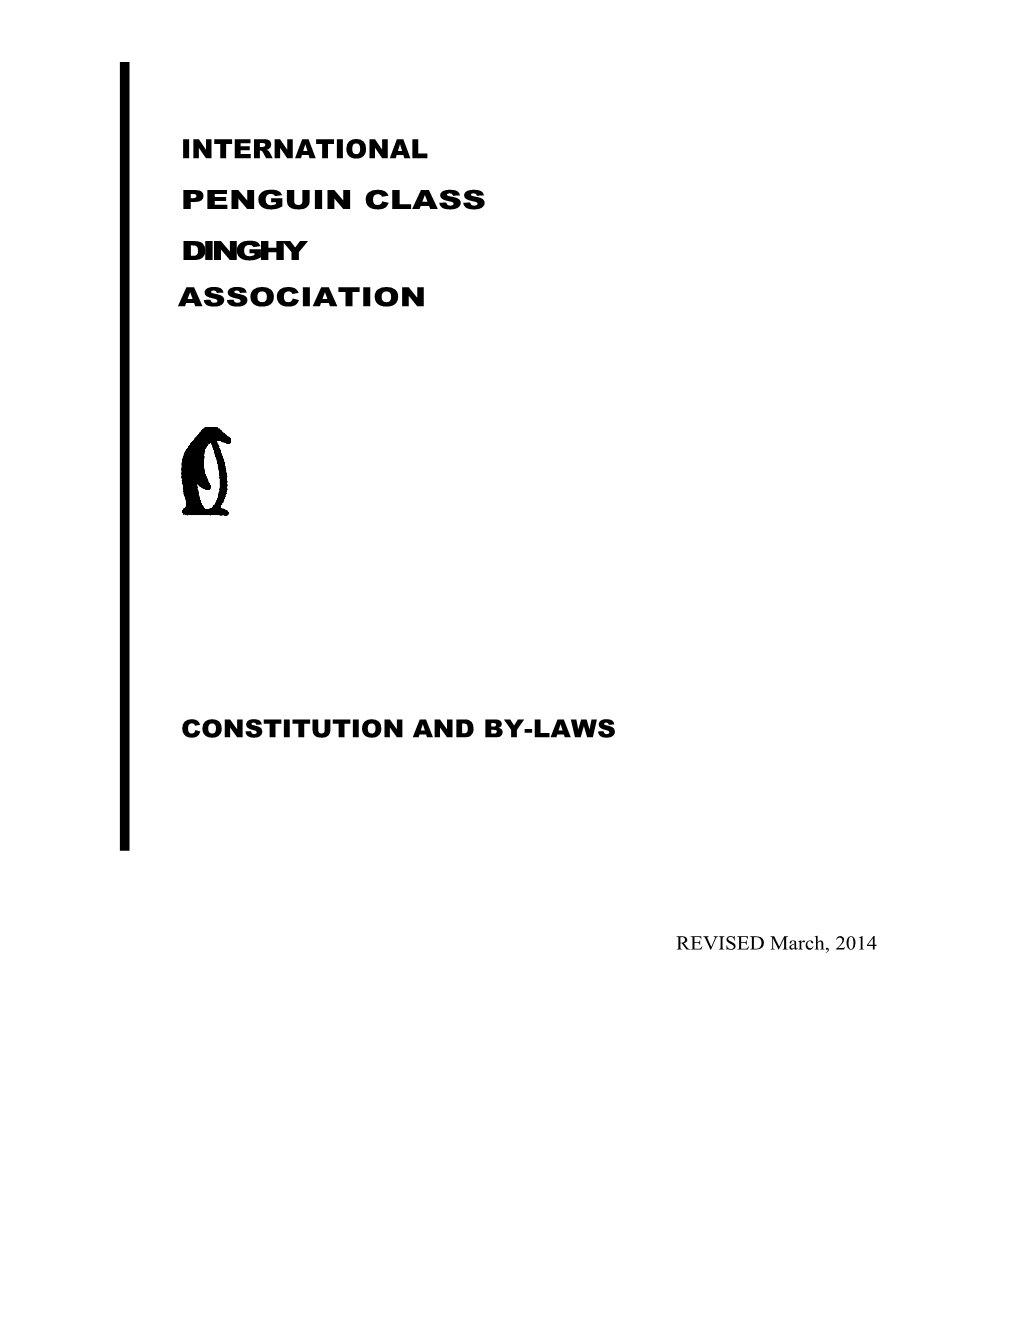 International Penguin Class Dinghy Association